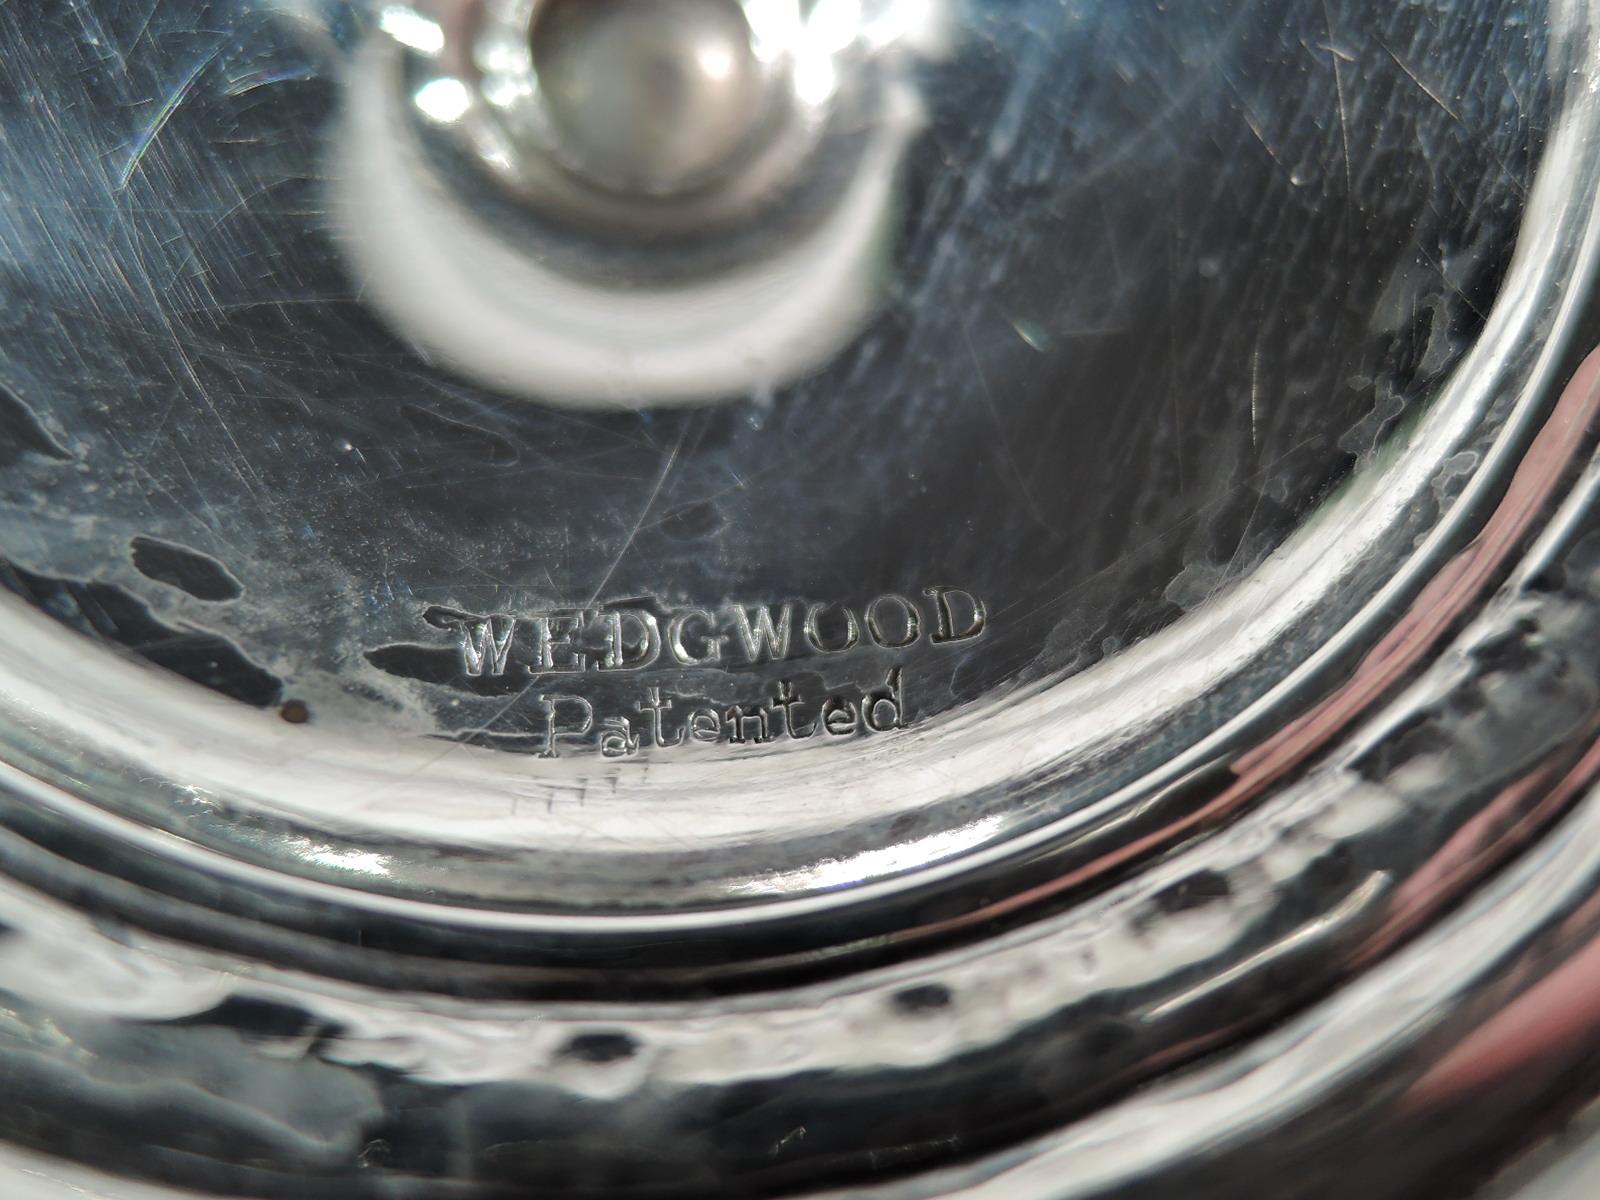 Set of 12 International Sterling Silver Goblets in Wedgwood Pattern 2